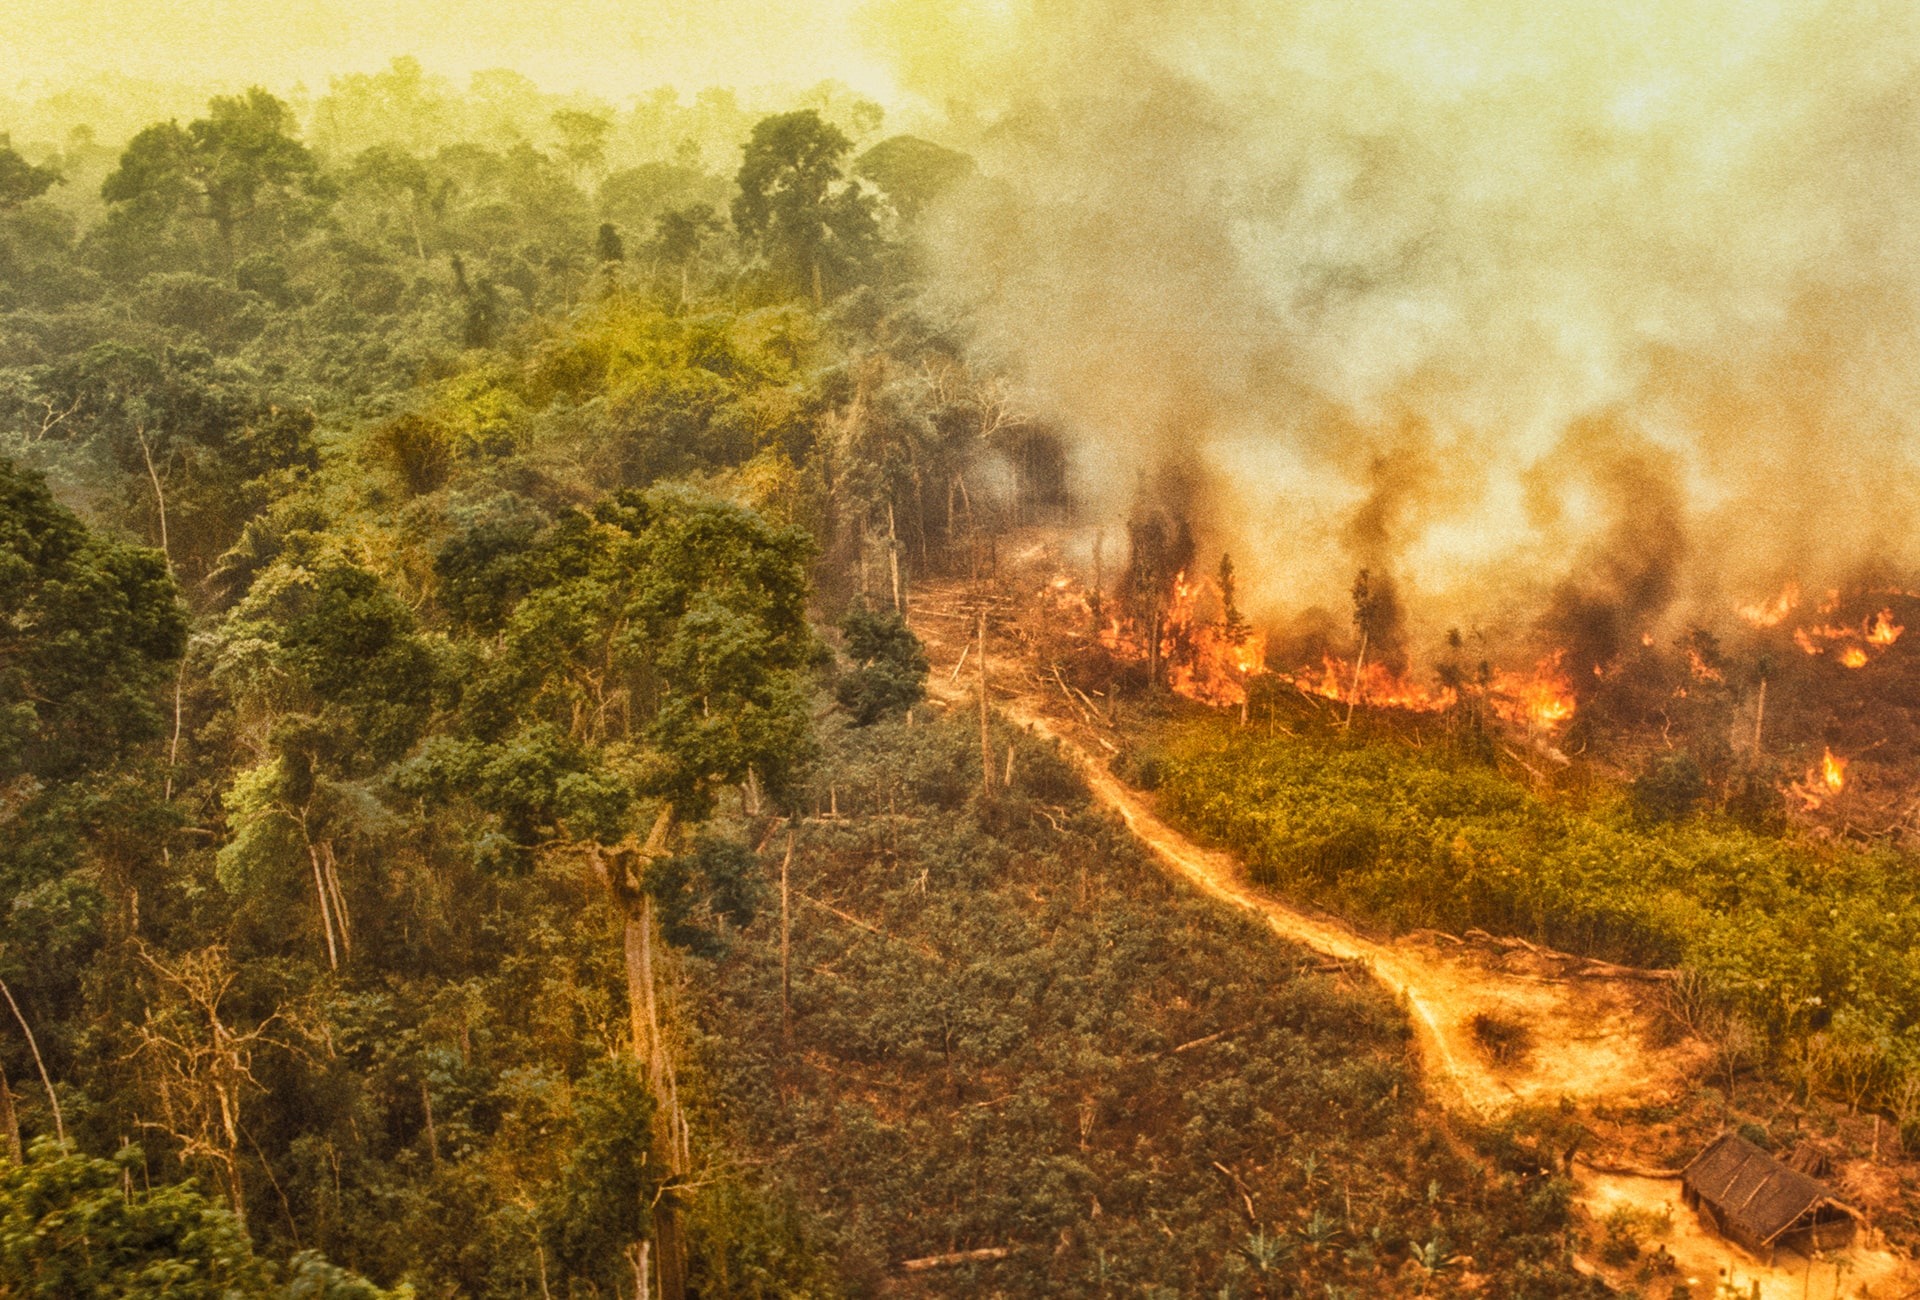 Amazon rainforest deforestation, by Brasil2